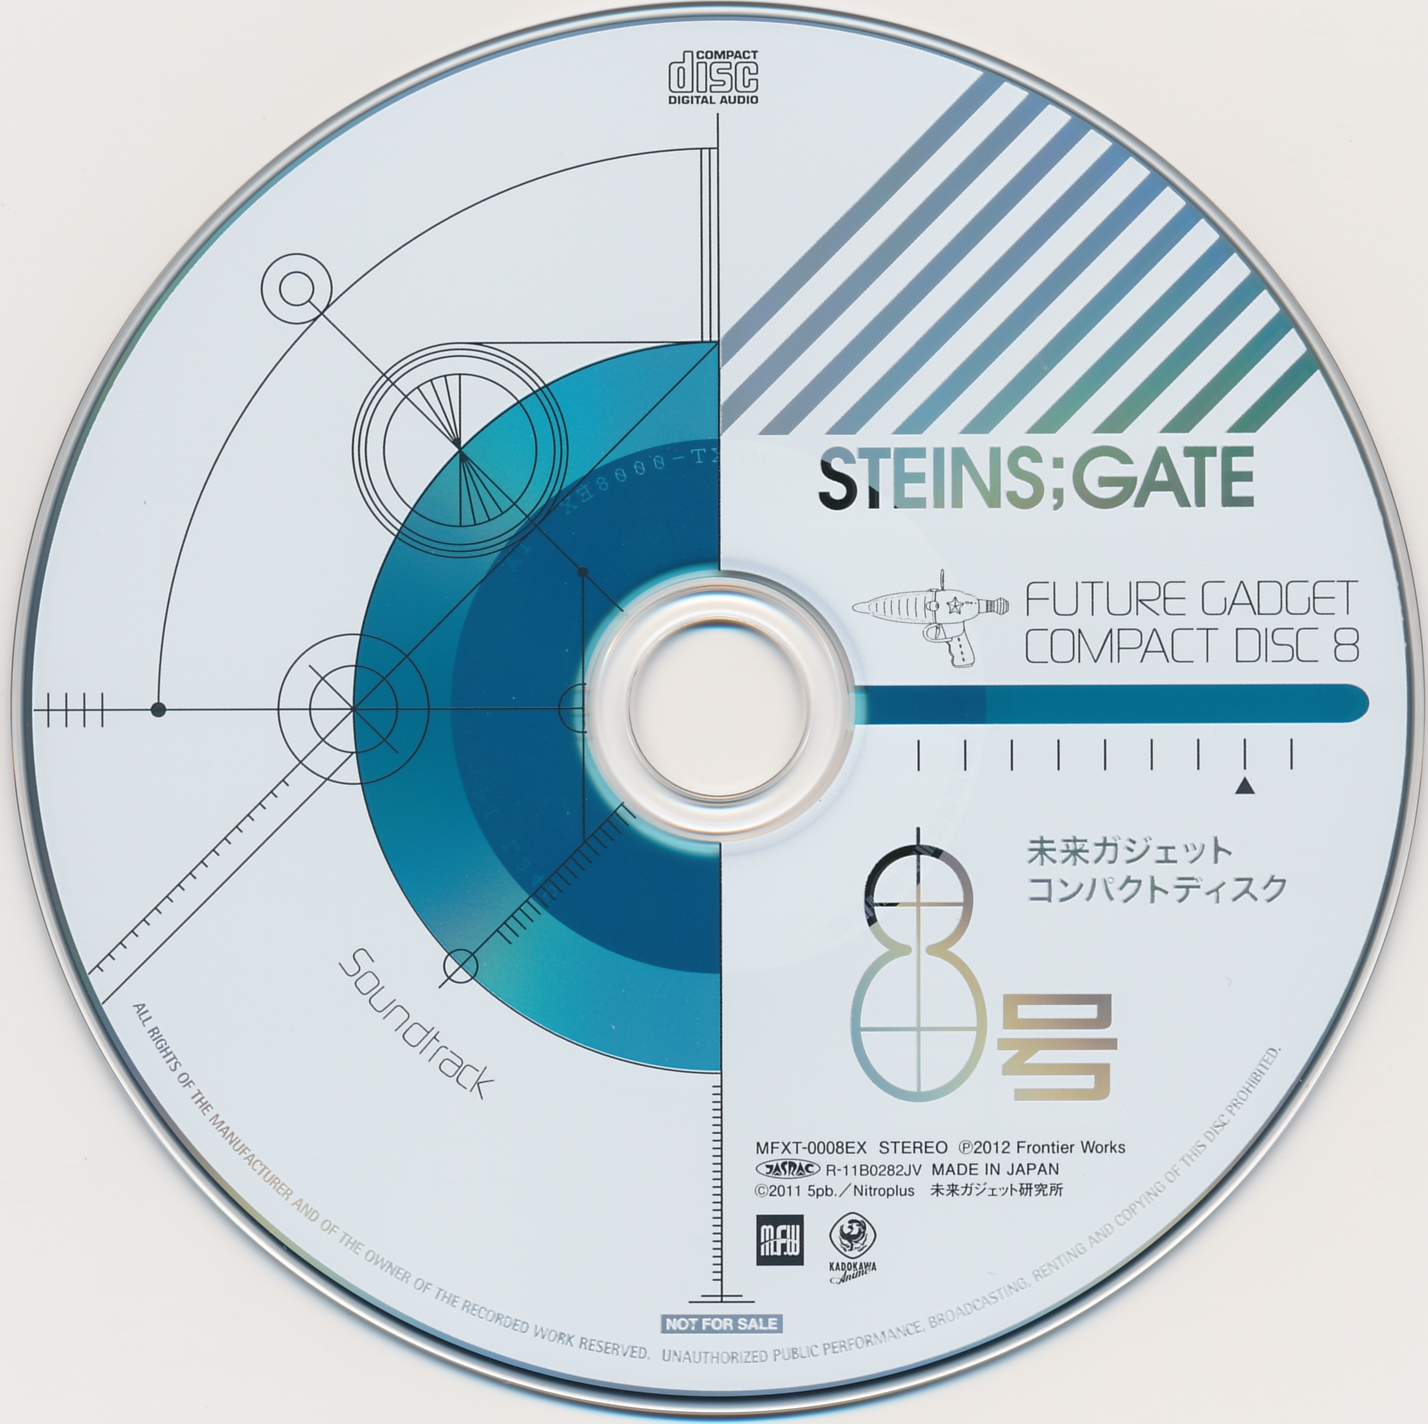 光碟-STEINS;GATE FUTURE GADGET COMPACT DISC 8.jpg